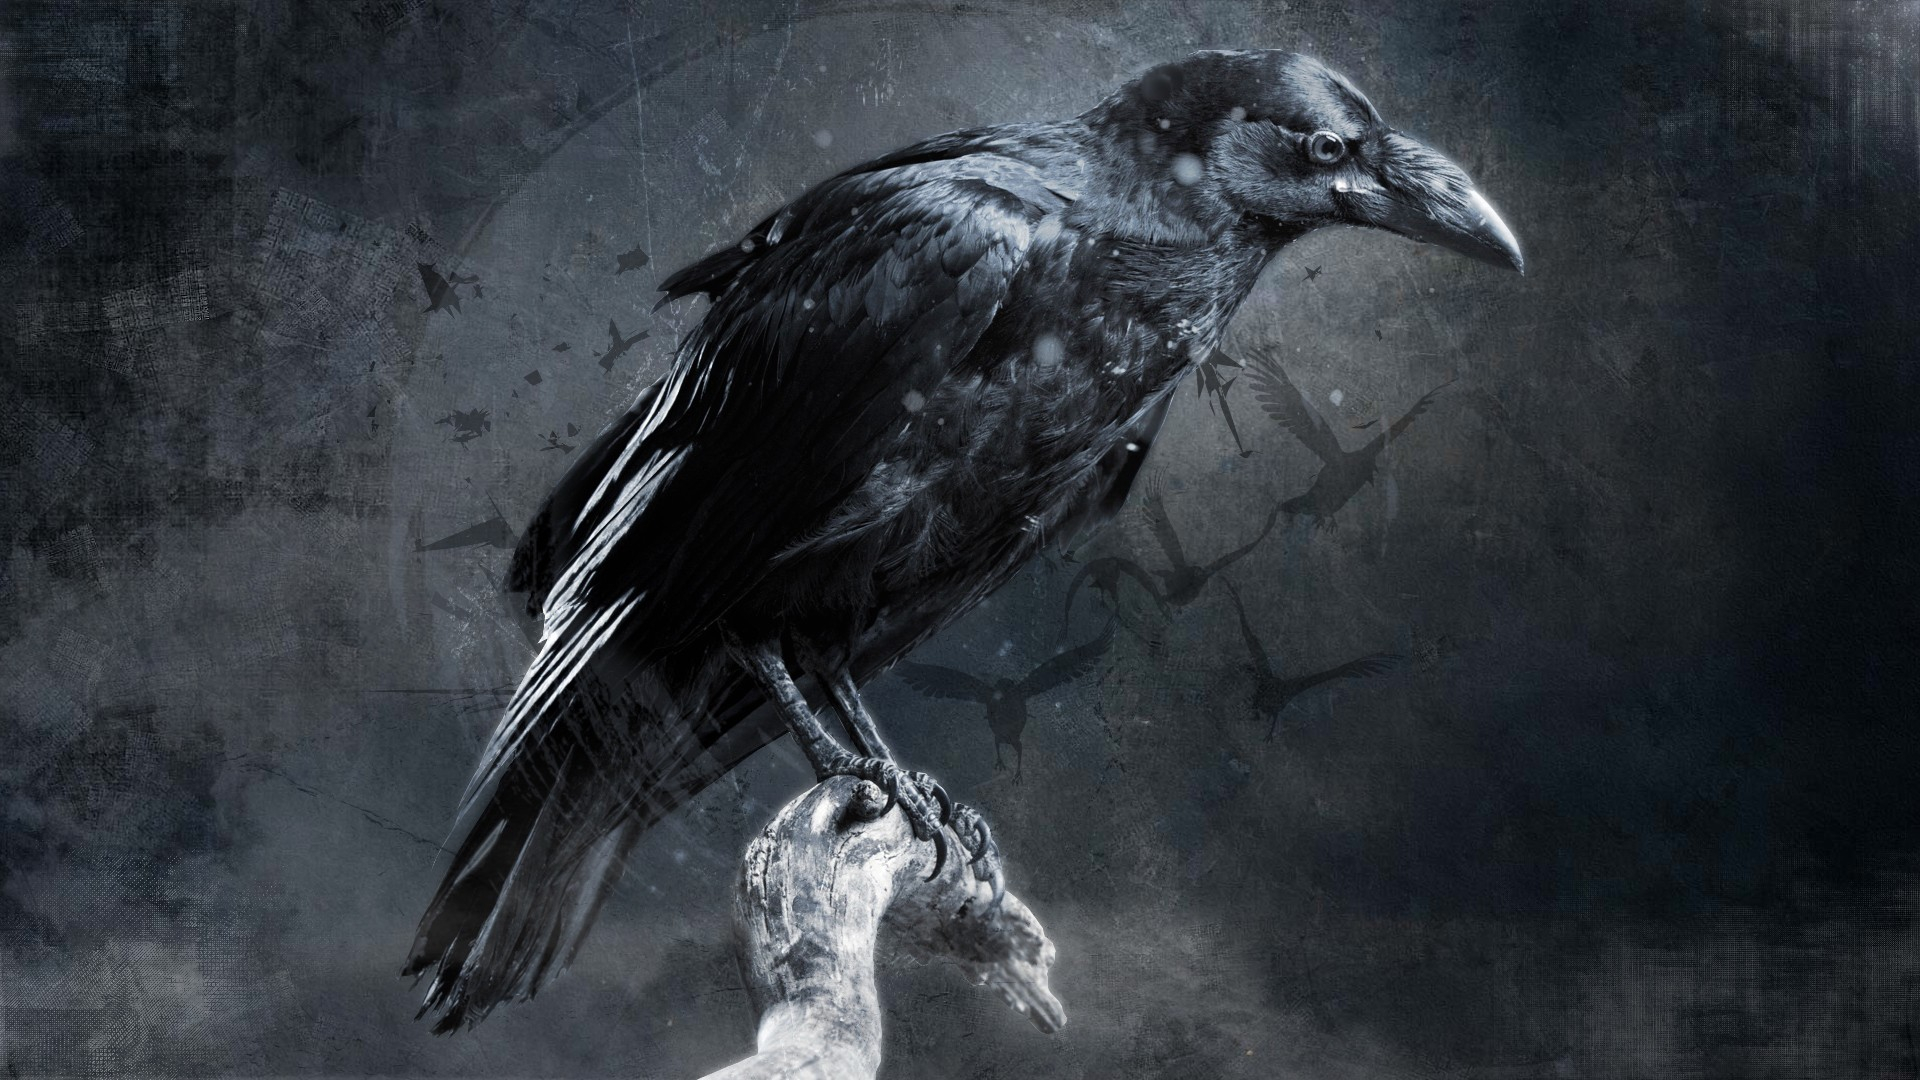 1920x1080 Wallpaper : digital art, raven, beak, darkness, wing, black and white, monochrome photography, perching bird, crow like bird pub4si 570586 HD Wallpapers